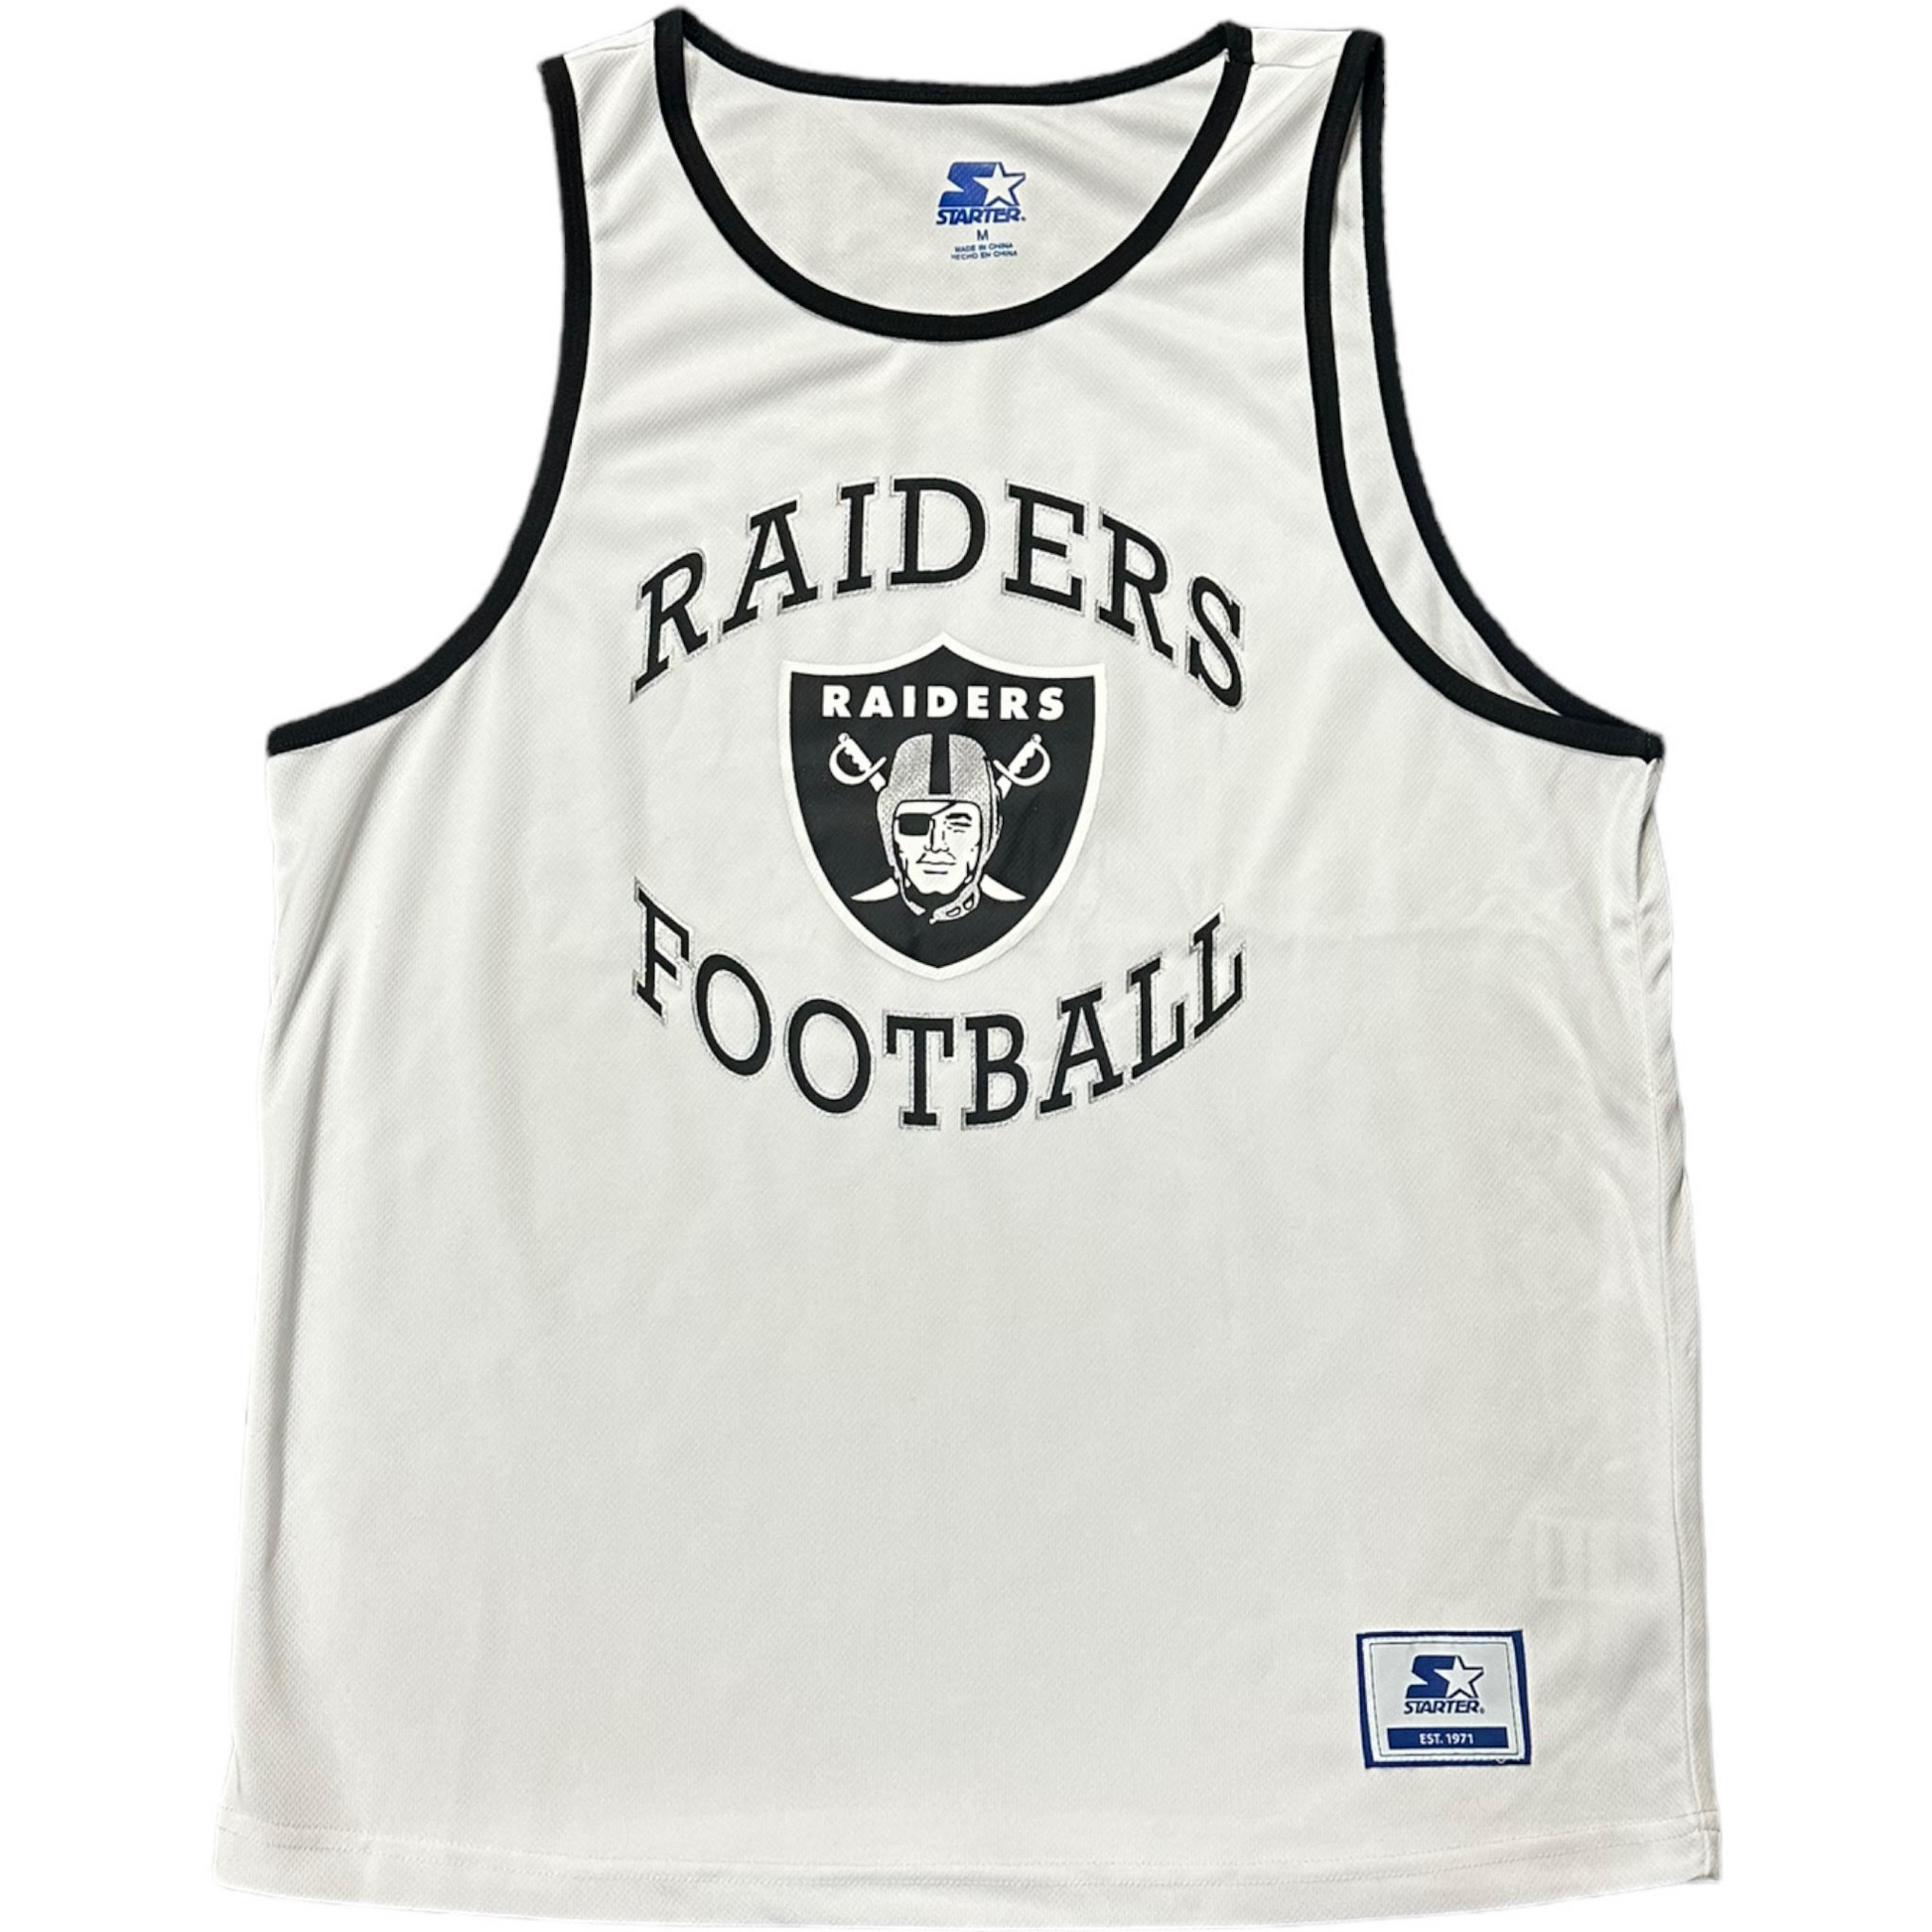 NFL Las Vegas Raiders T Shirt Mens S or M American Football Jersey